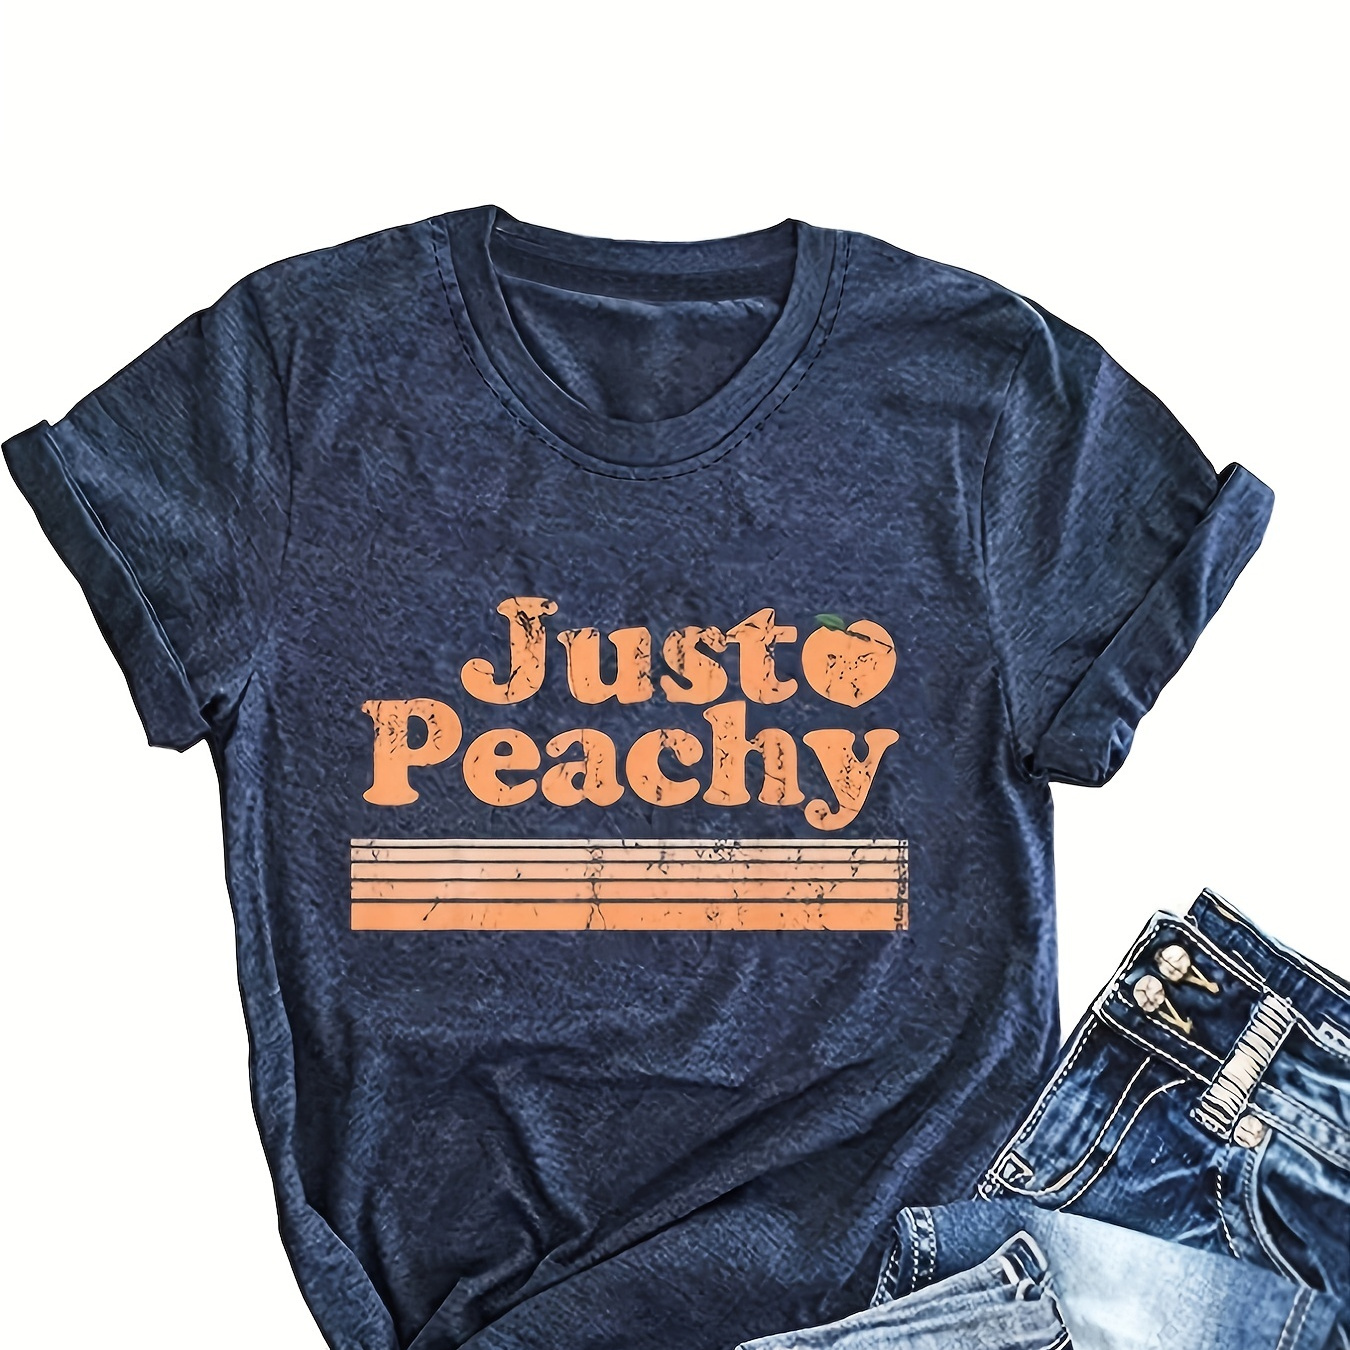 

Just Peachy Print T-shirt, Casual Crew Neck Short Sleeve Summer T-shirt, Women's Clothing